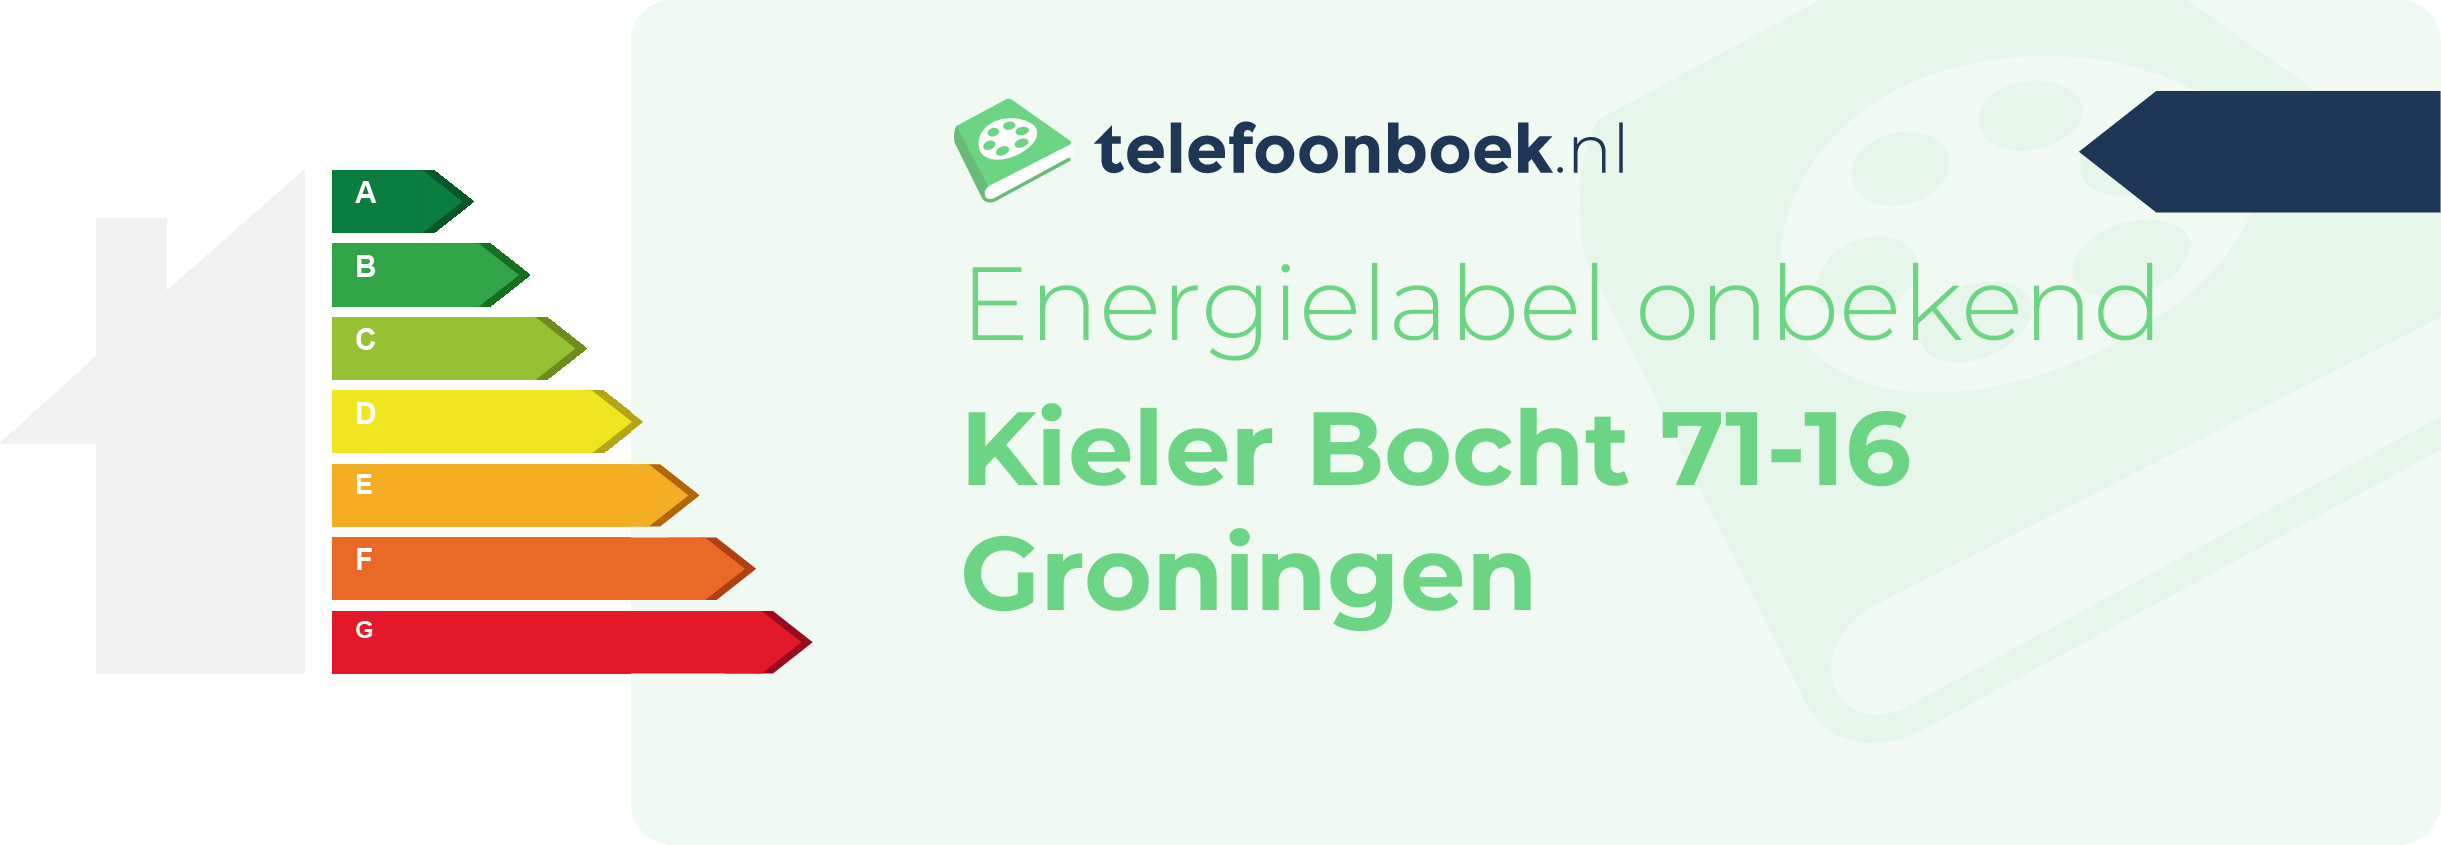 Energielabel Kieler Bocht 71-16 Groningen